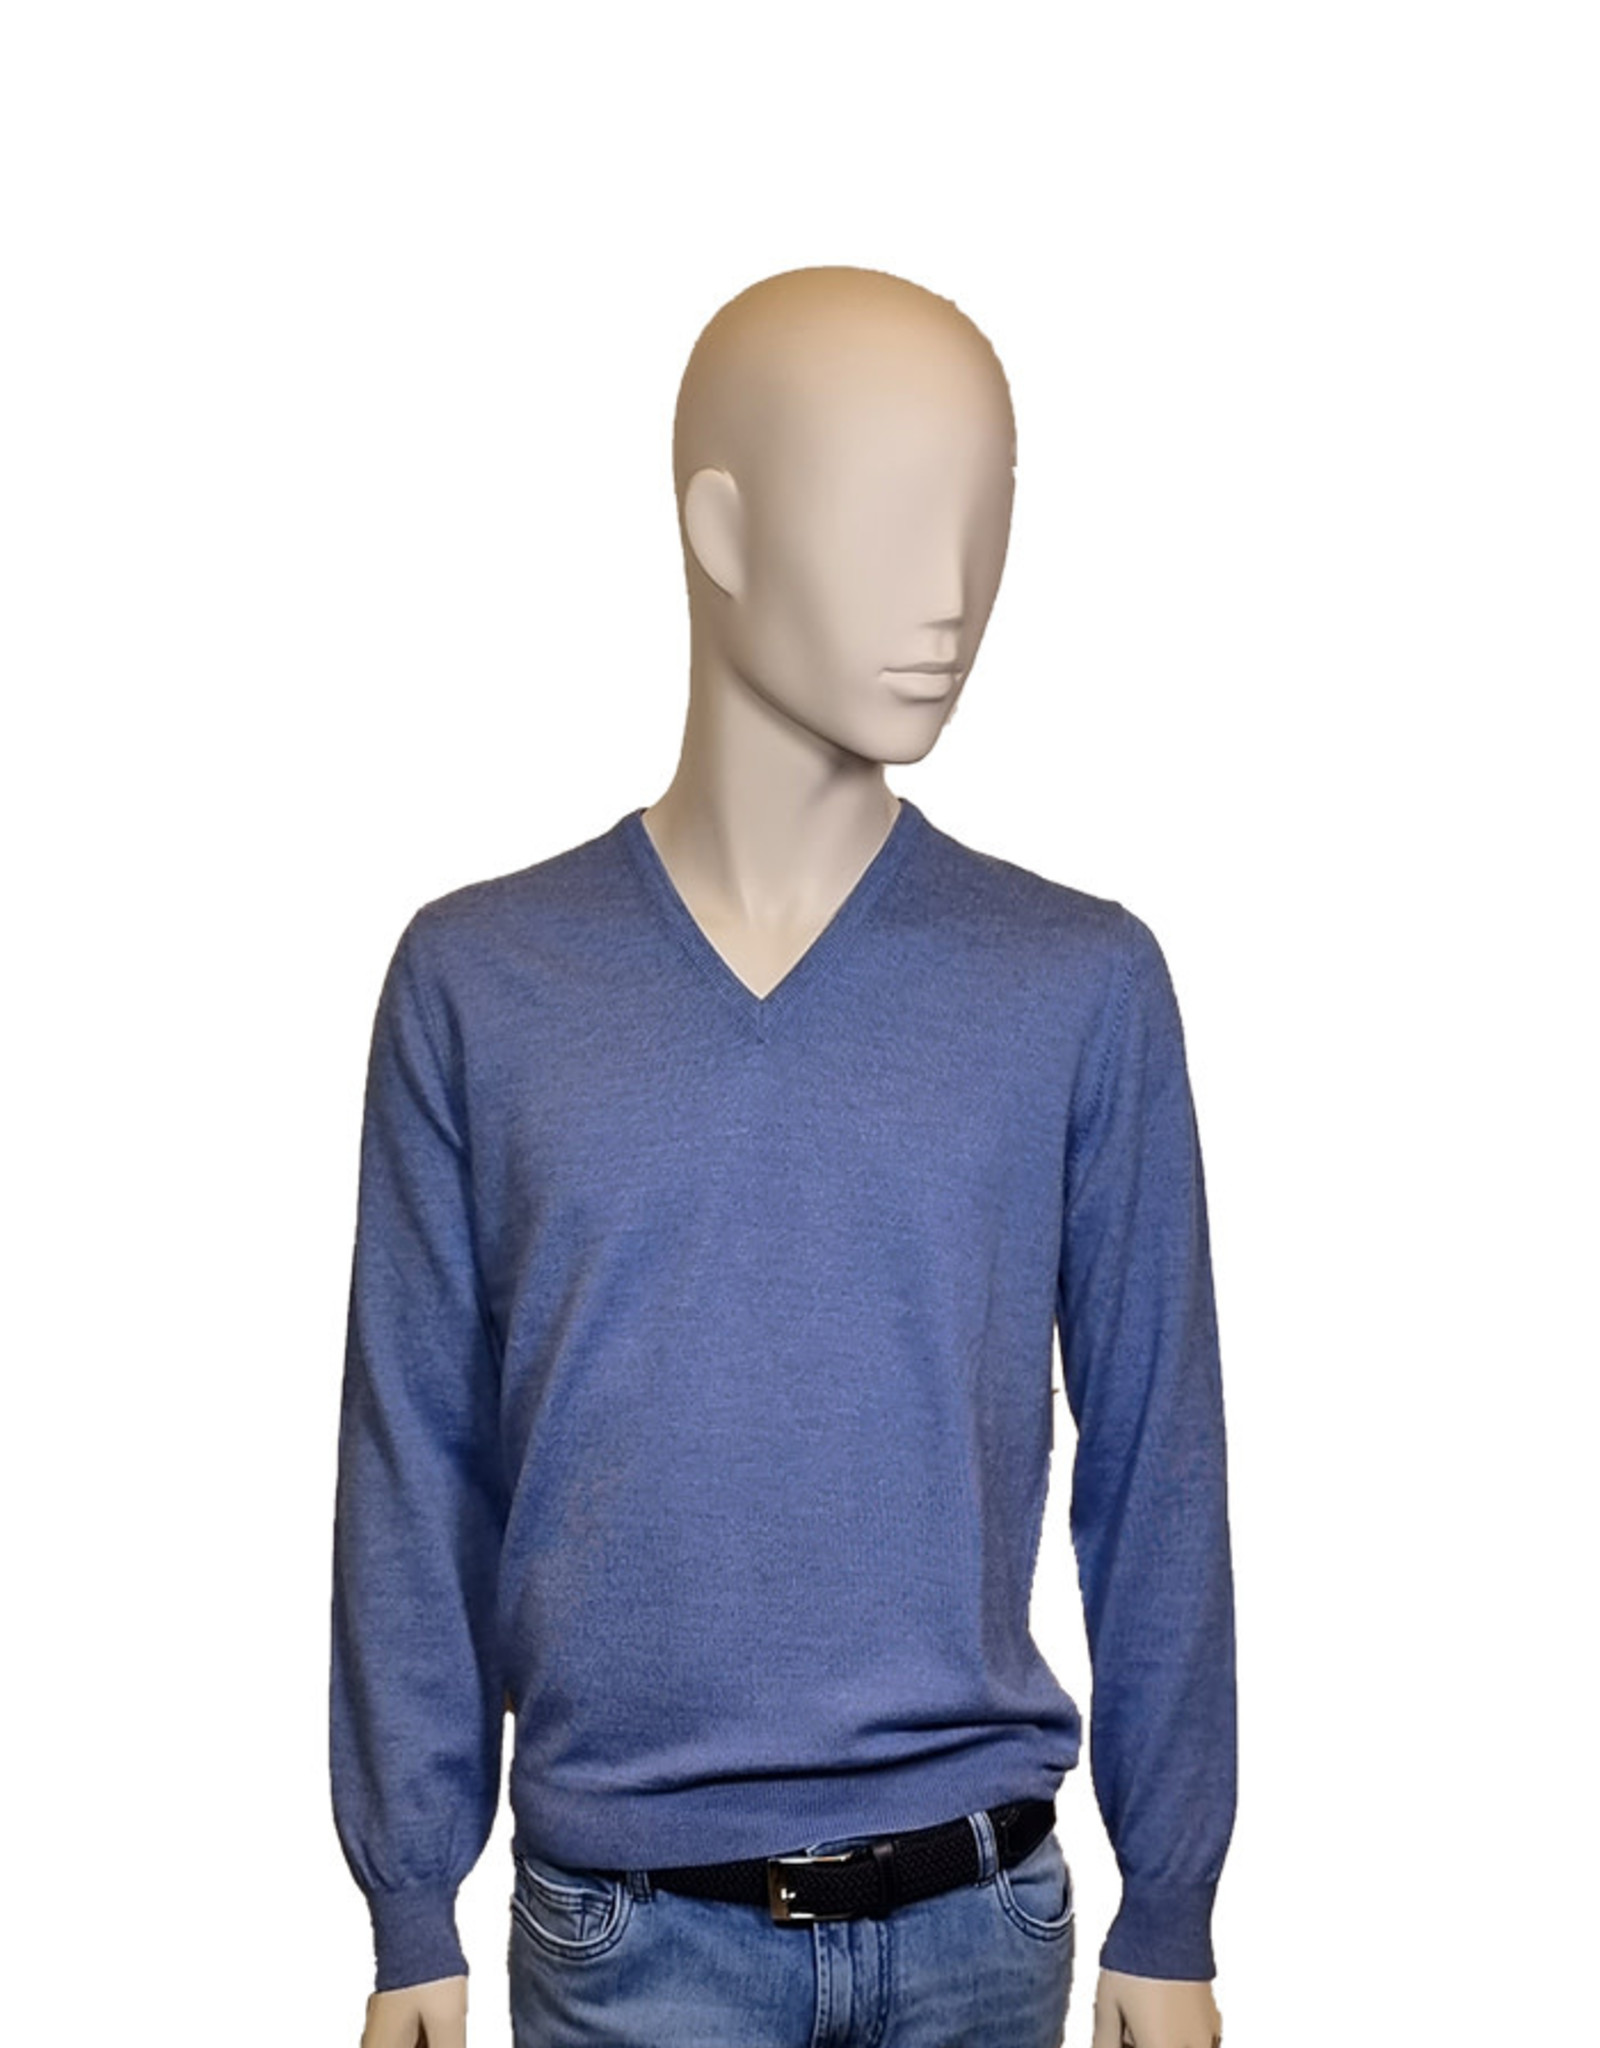 Gran Sasso Sandmore's sweater v-neck light blue 14290/071 M:55115